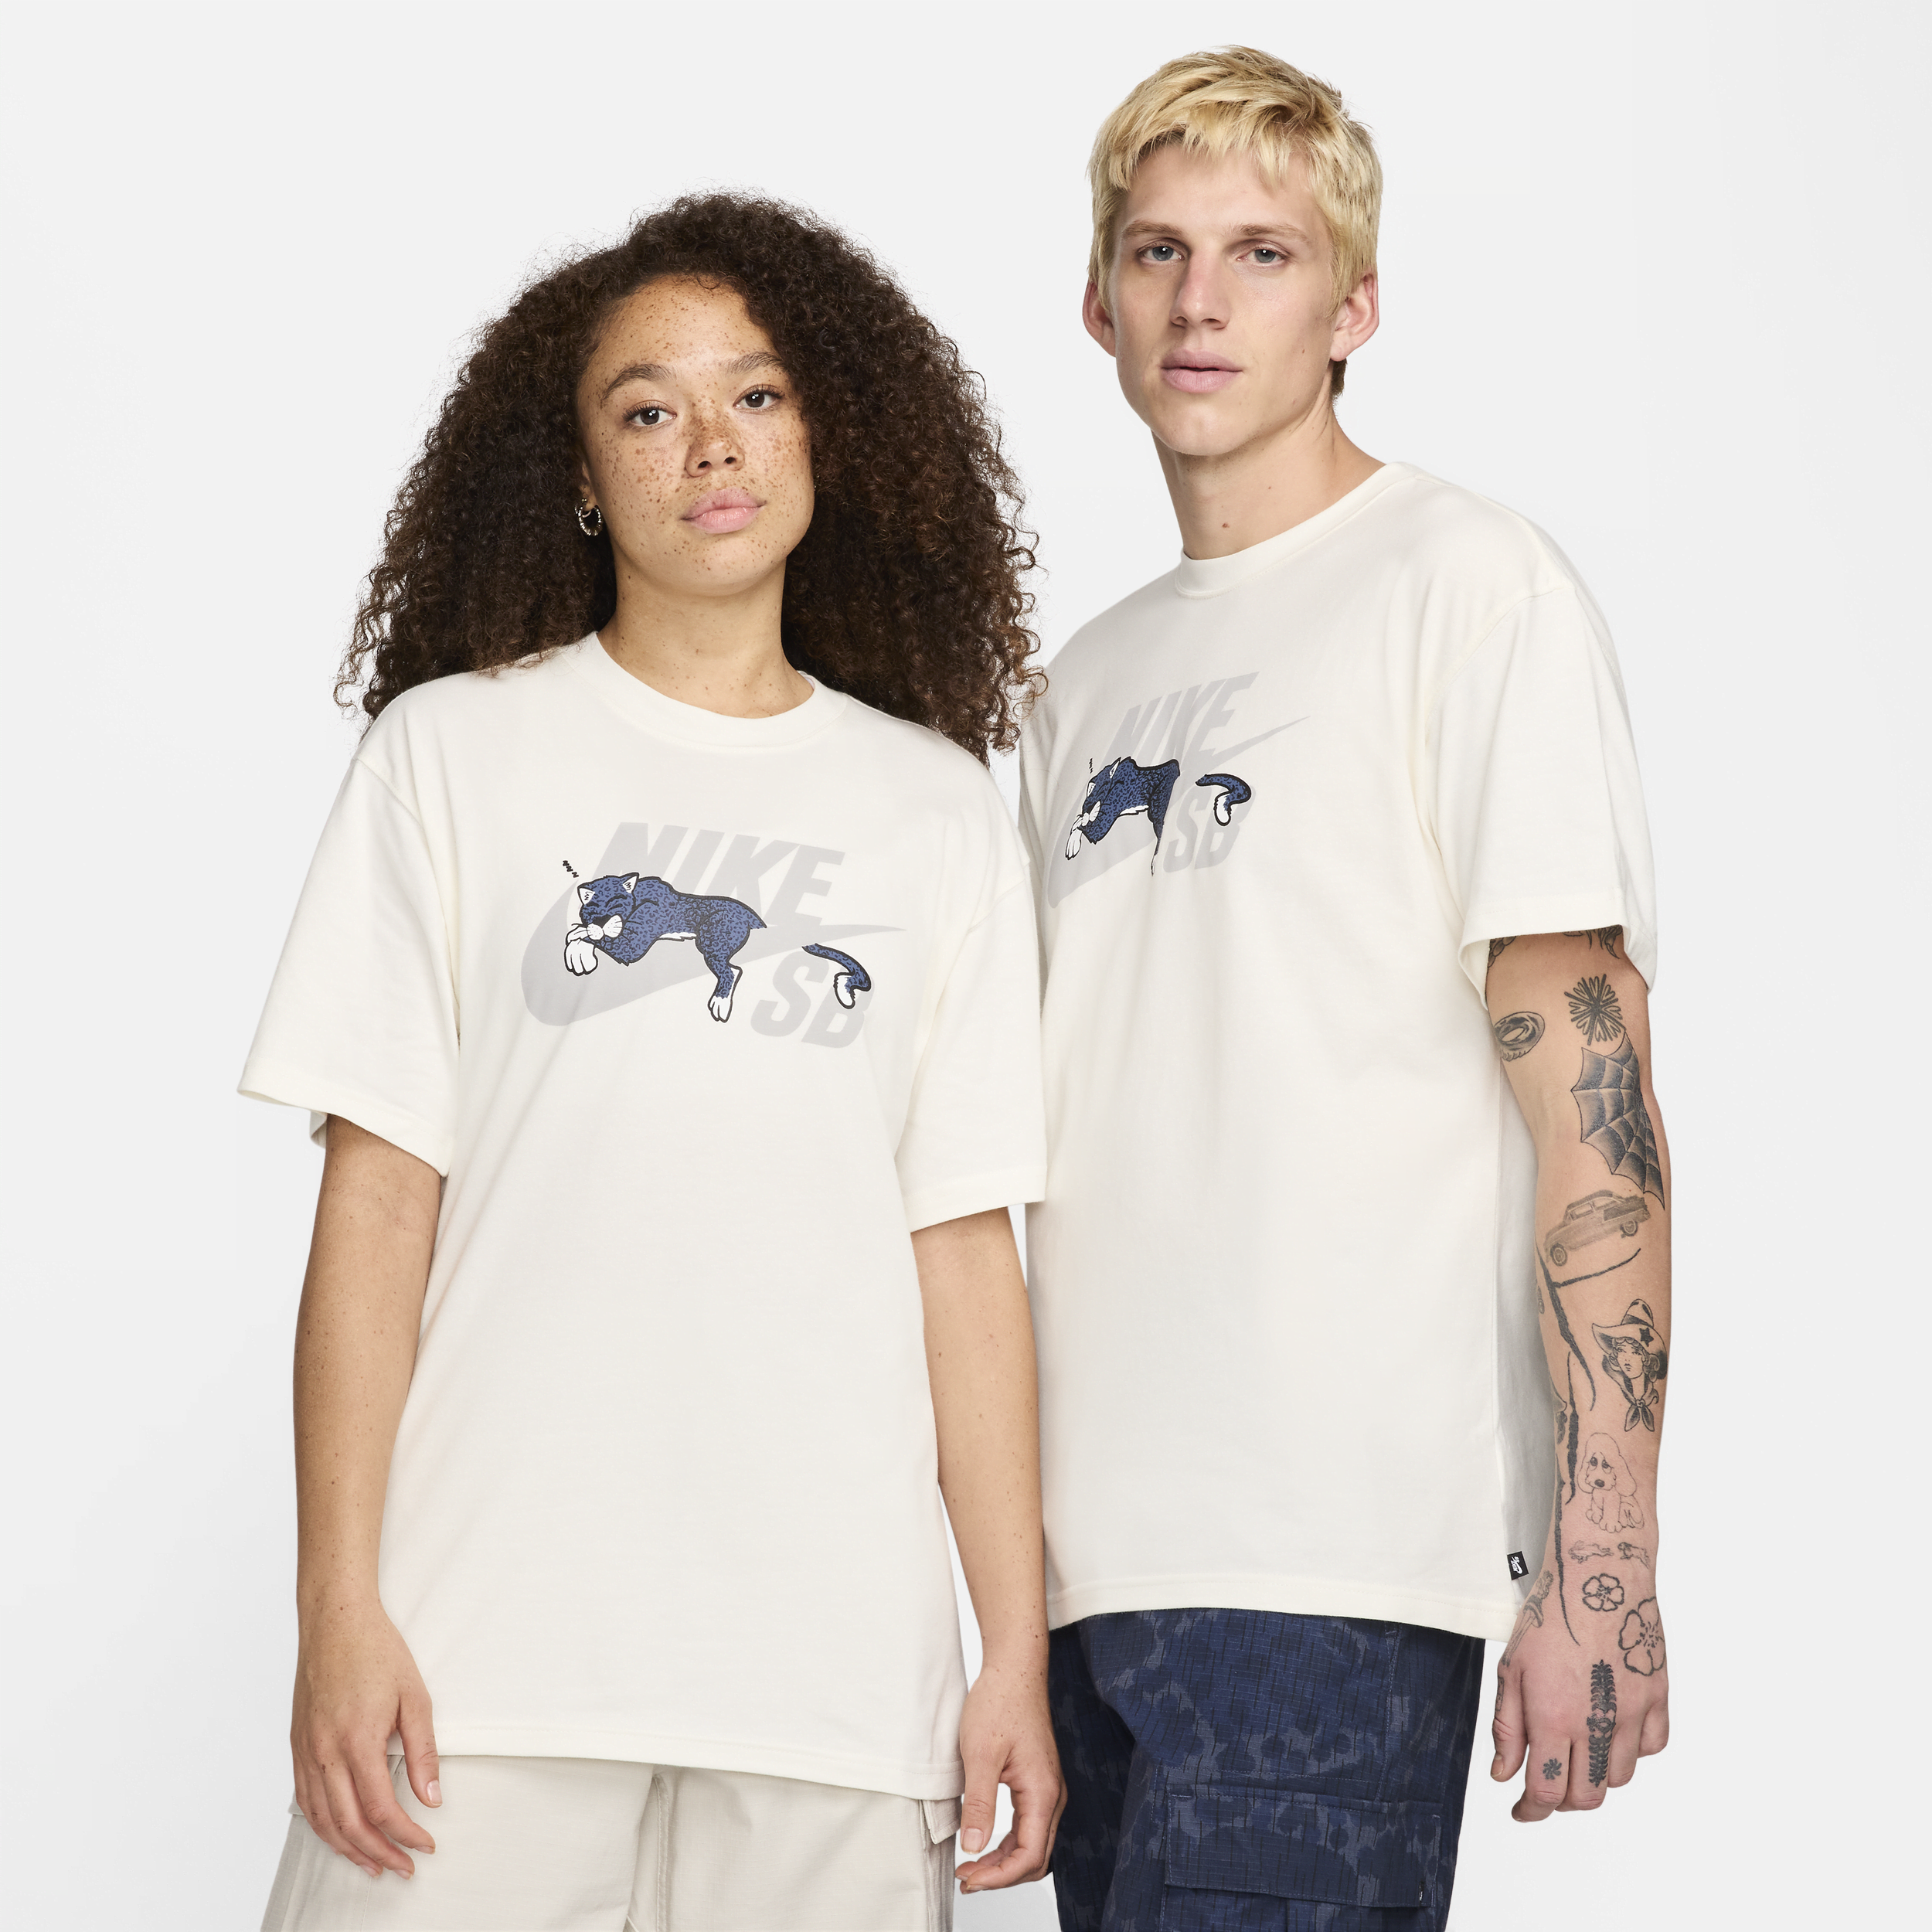 Nike SB Camiseta de skateboard - Blanco